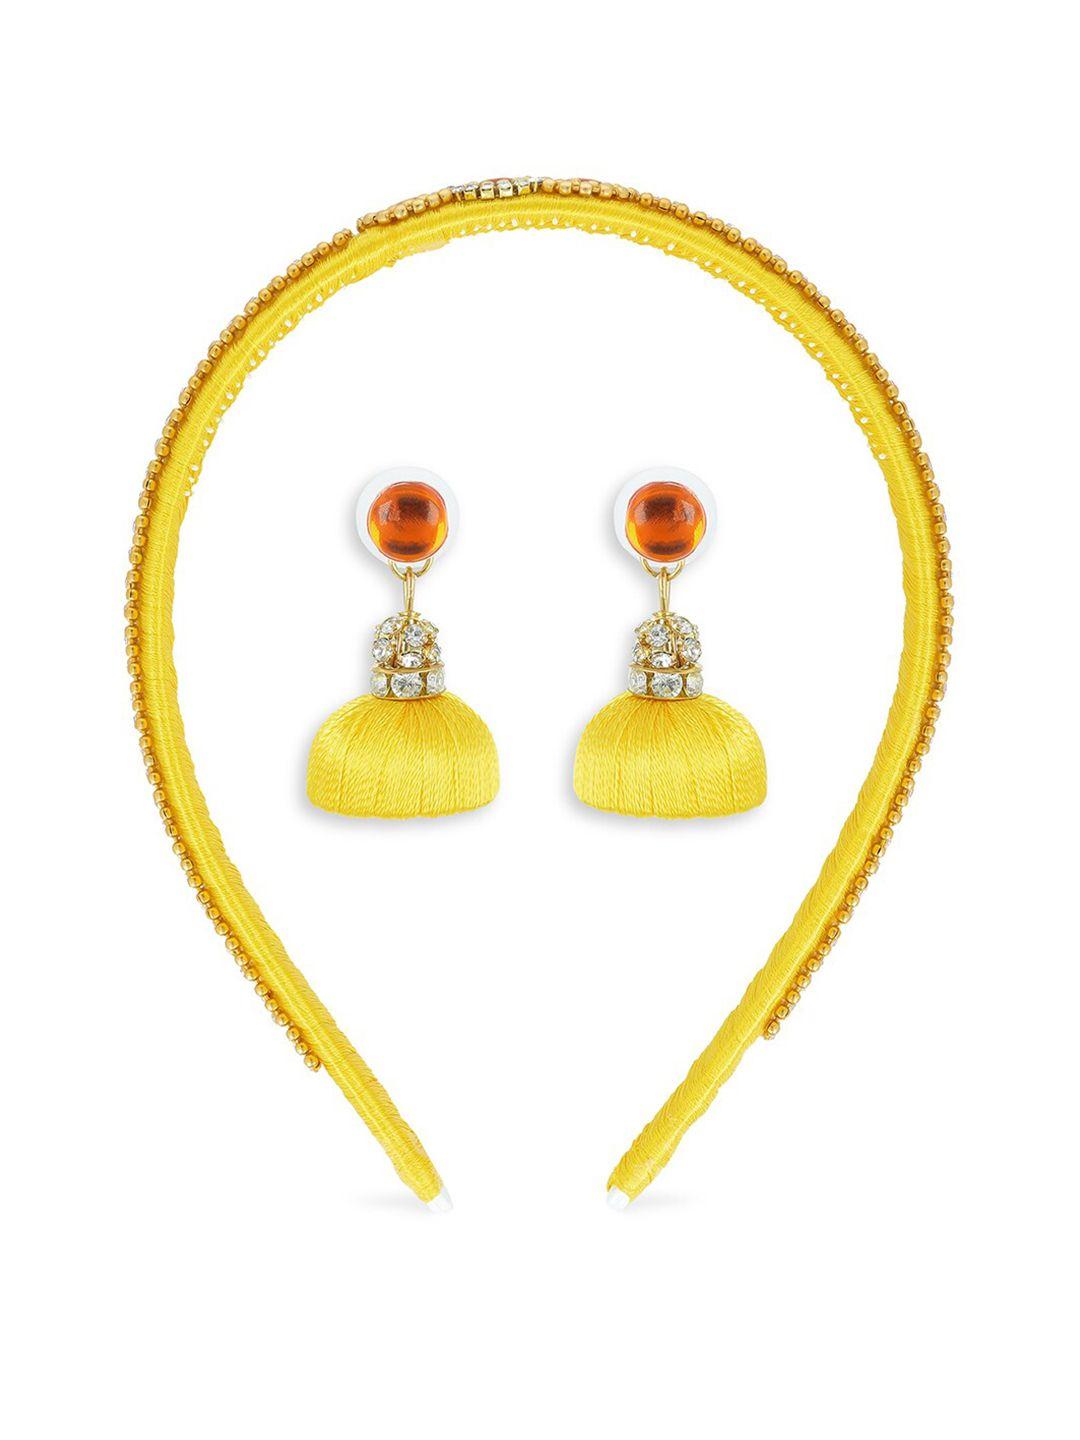 akshara girls yellow & gold-toned beaded hair accessory set